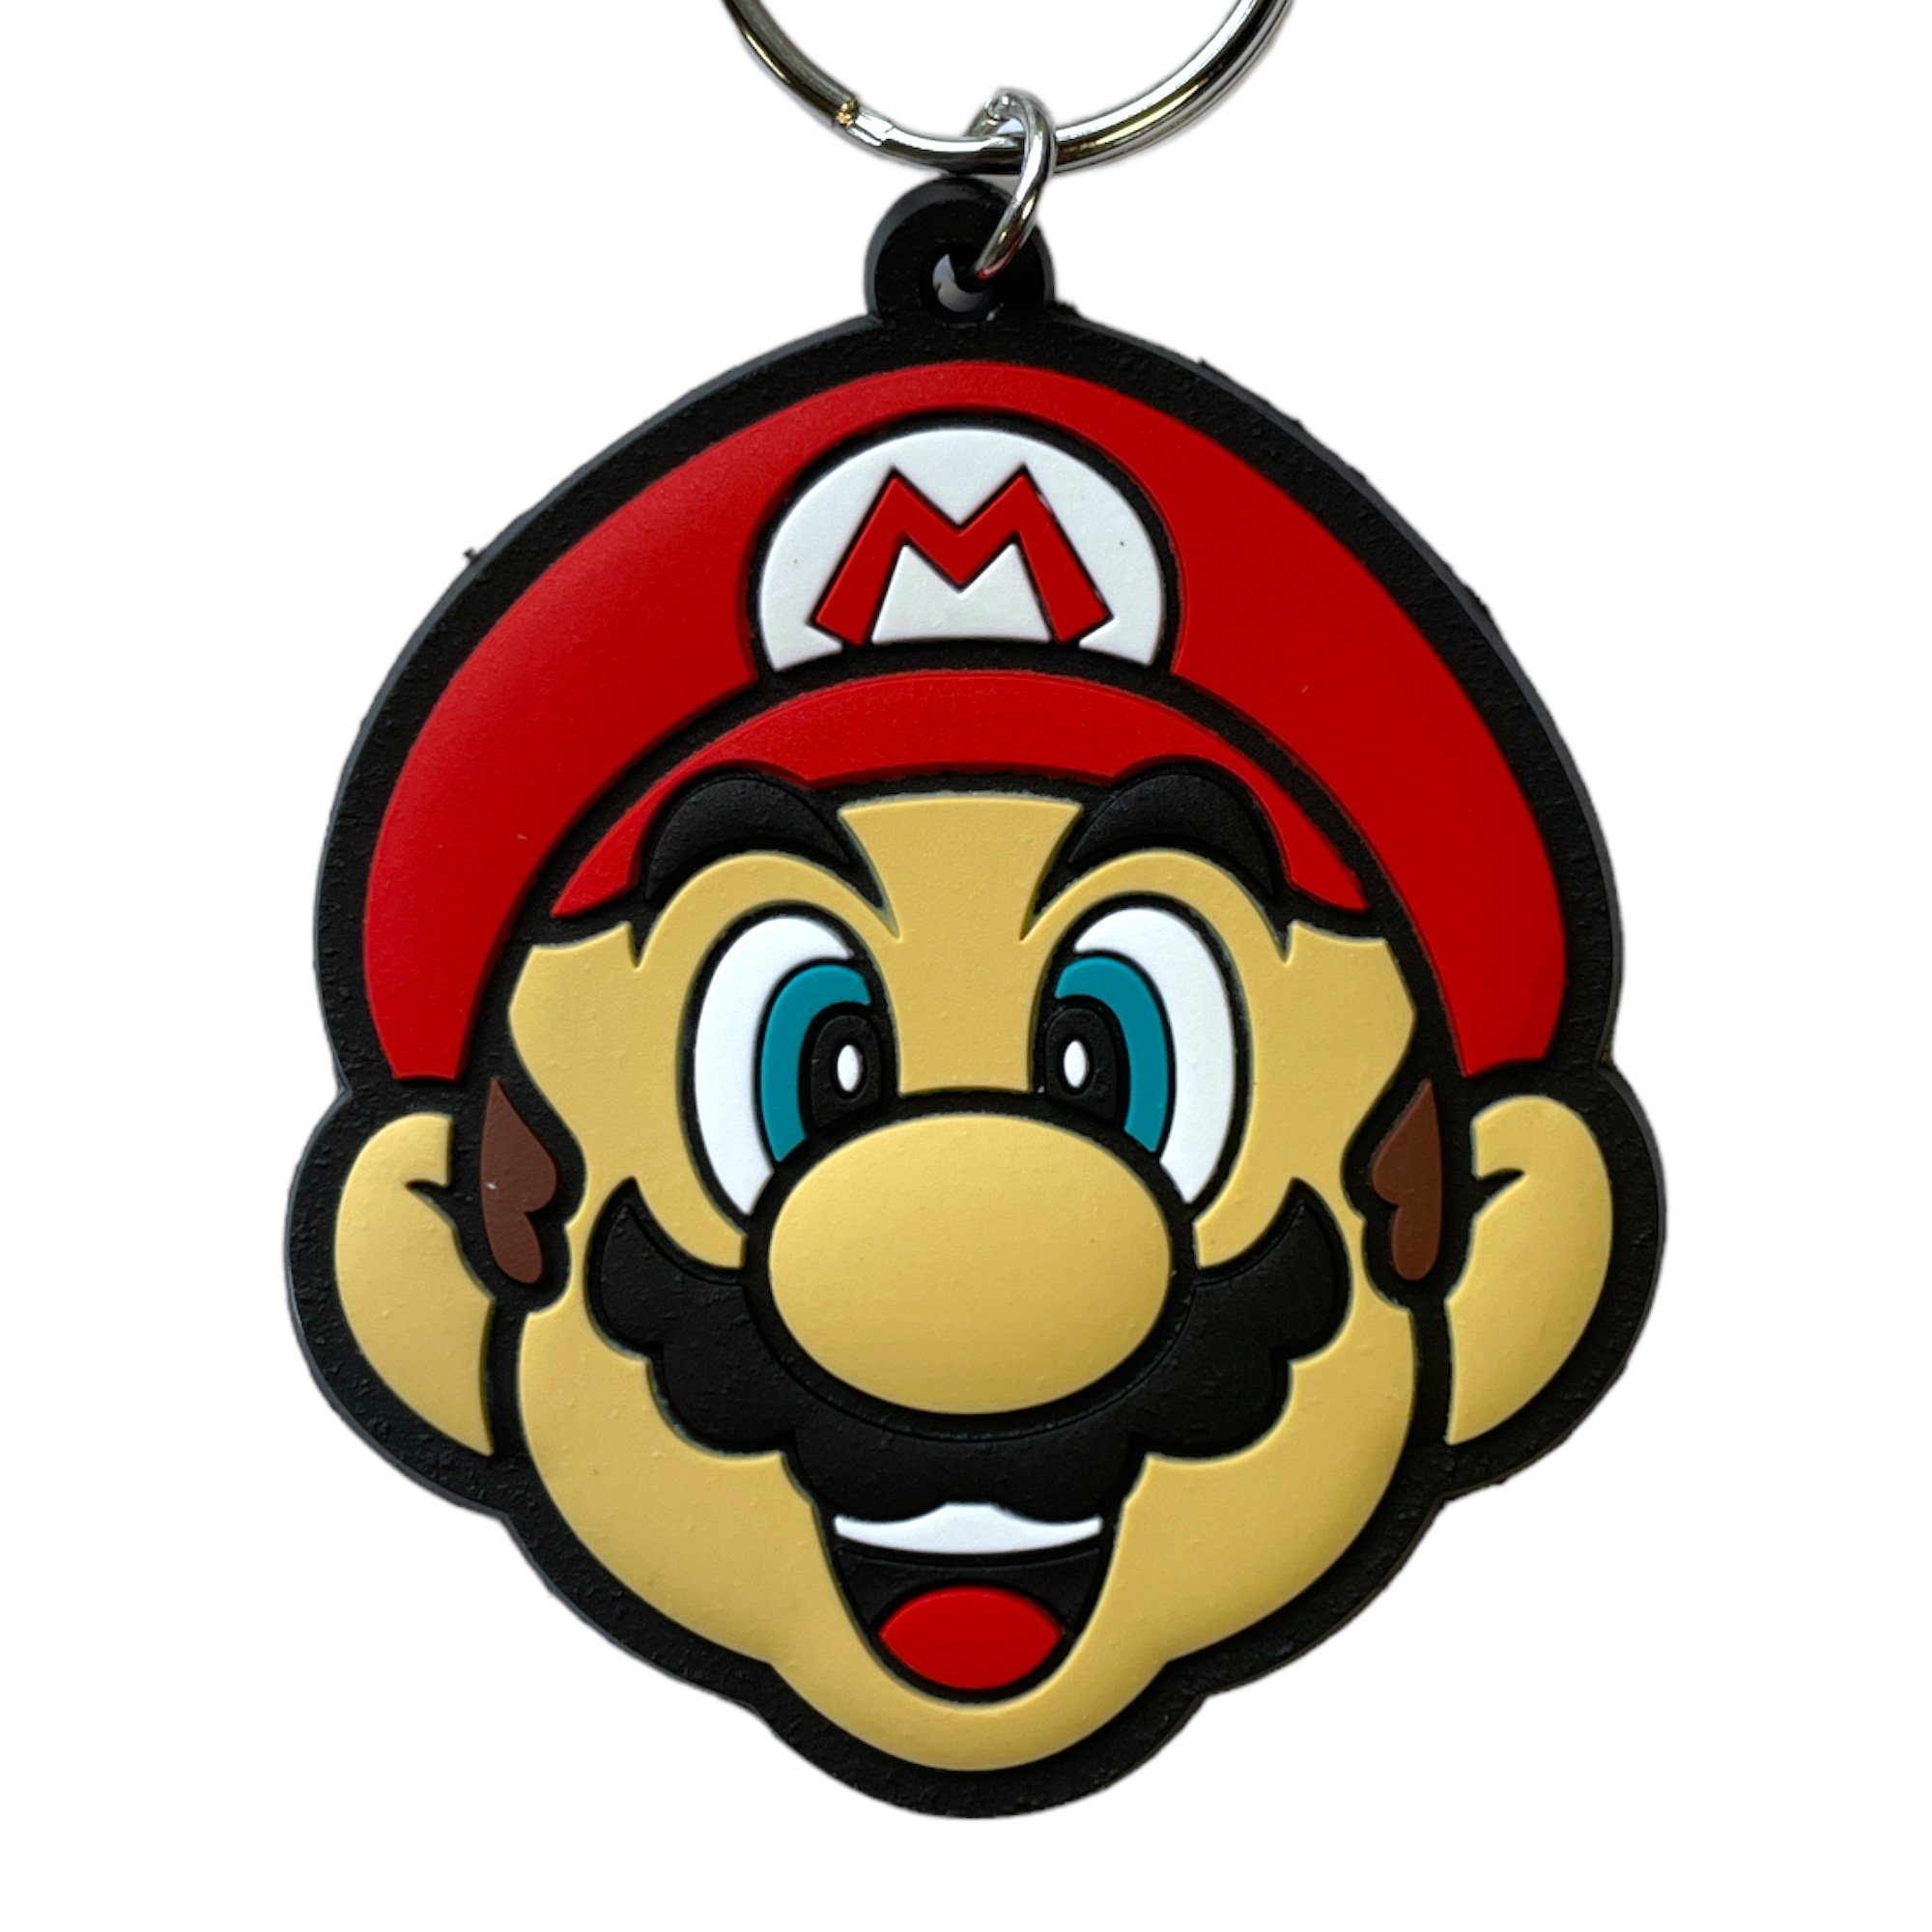 PYRAMID Schlüsselanhänger Mario - Nintendo Super Mario